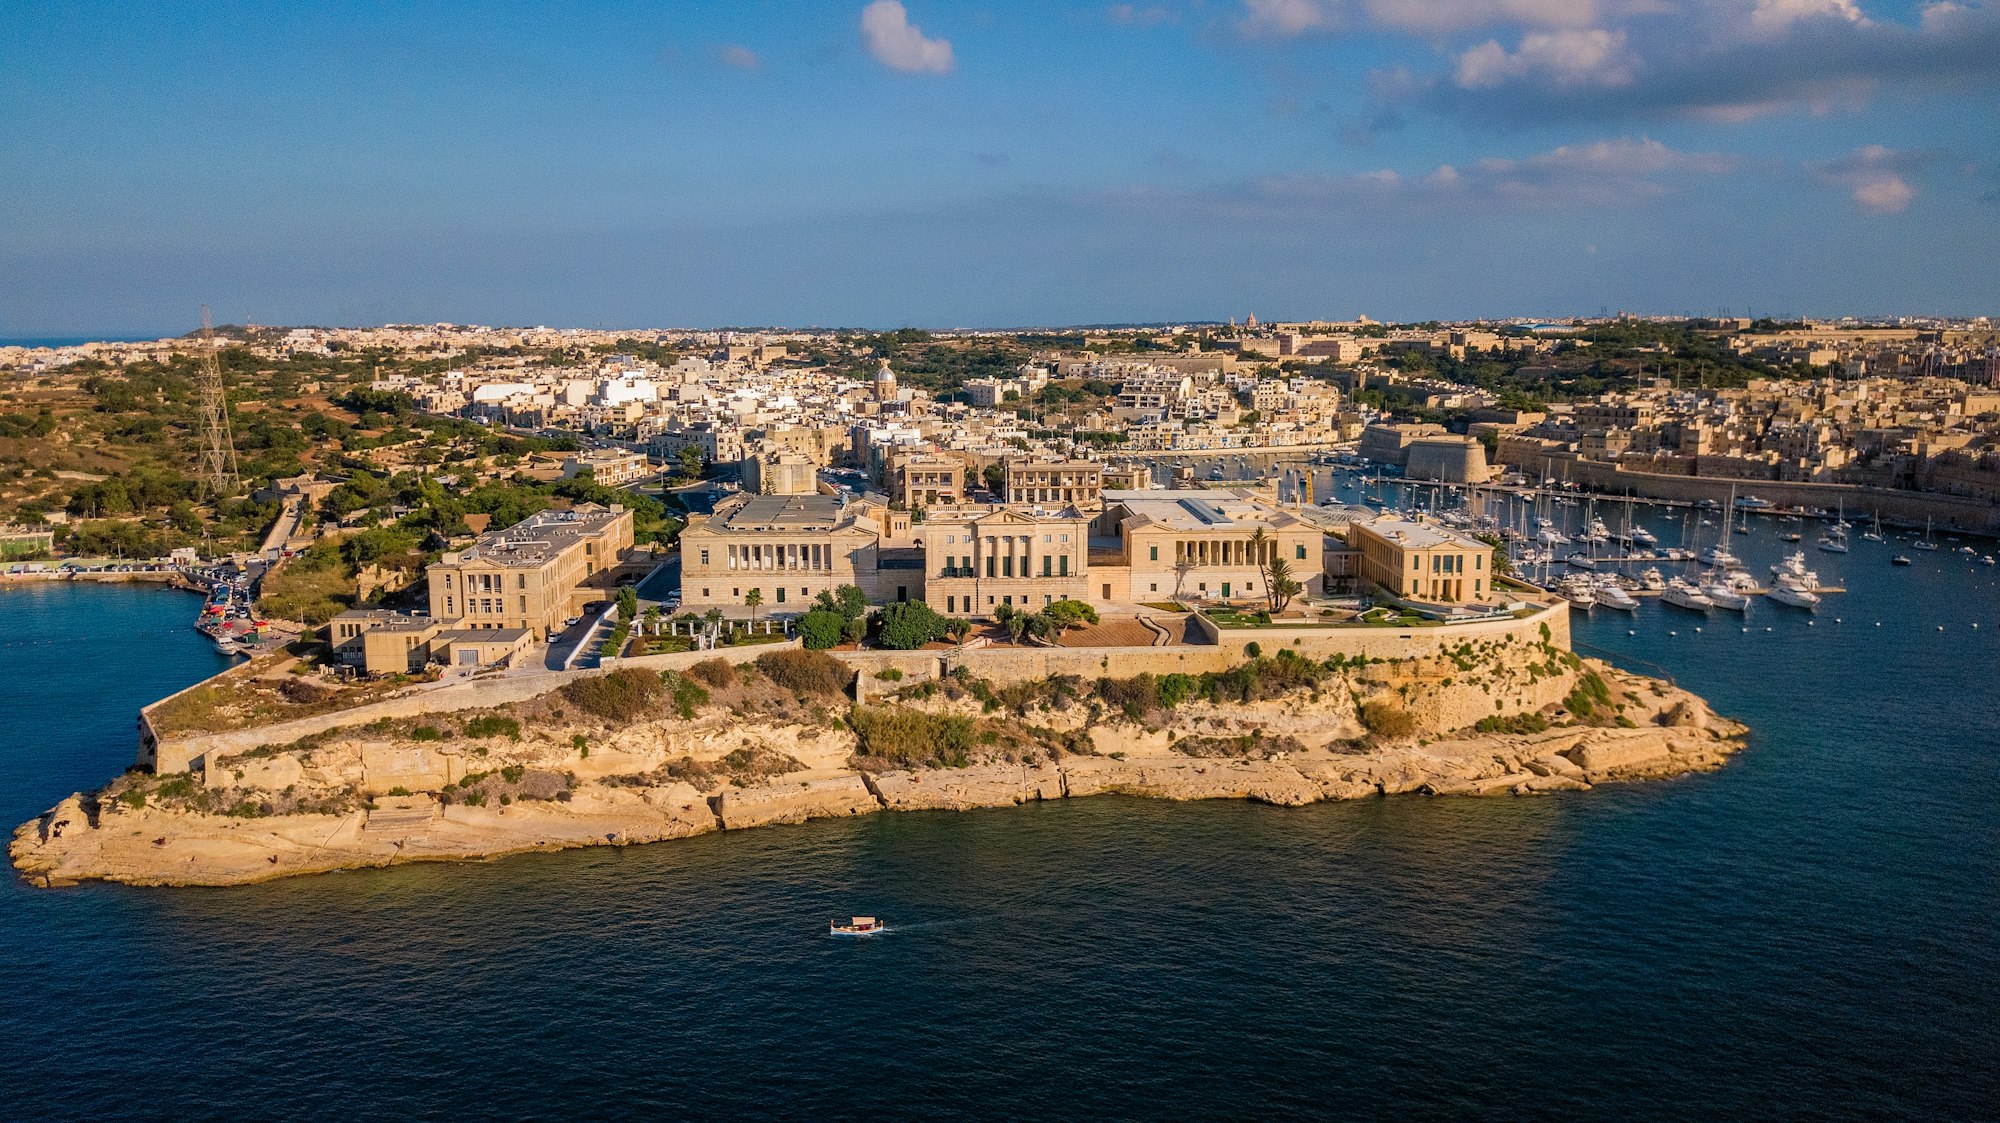 Aerial view of Villa Bighi, Kalkara, Malta, harbour, sailboats, Photo by Mike Nahlii / Unsplash